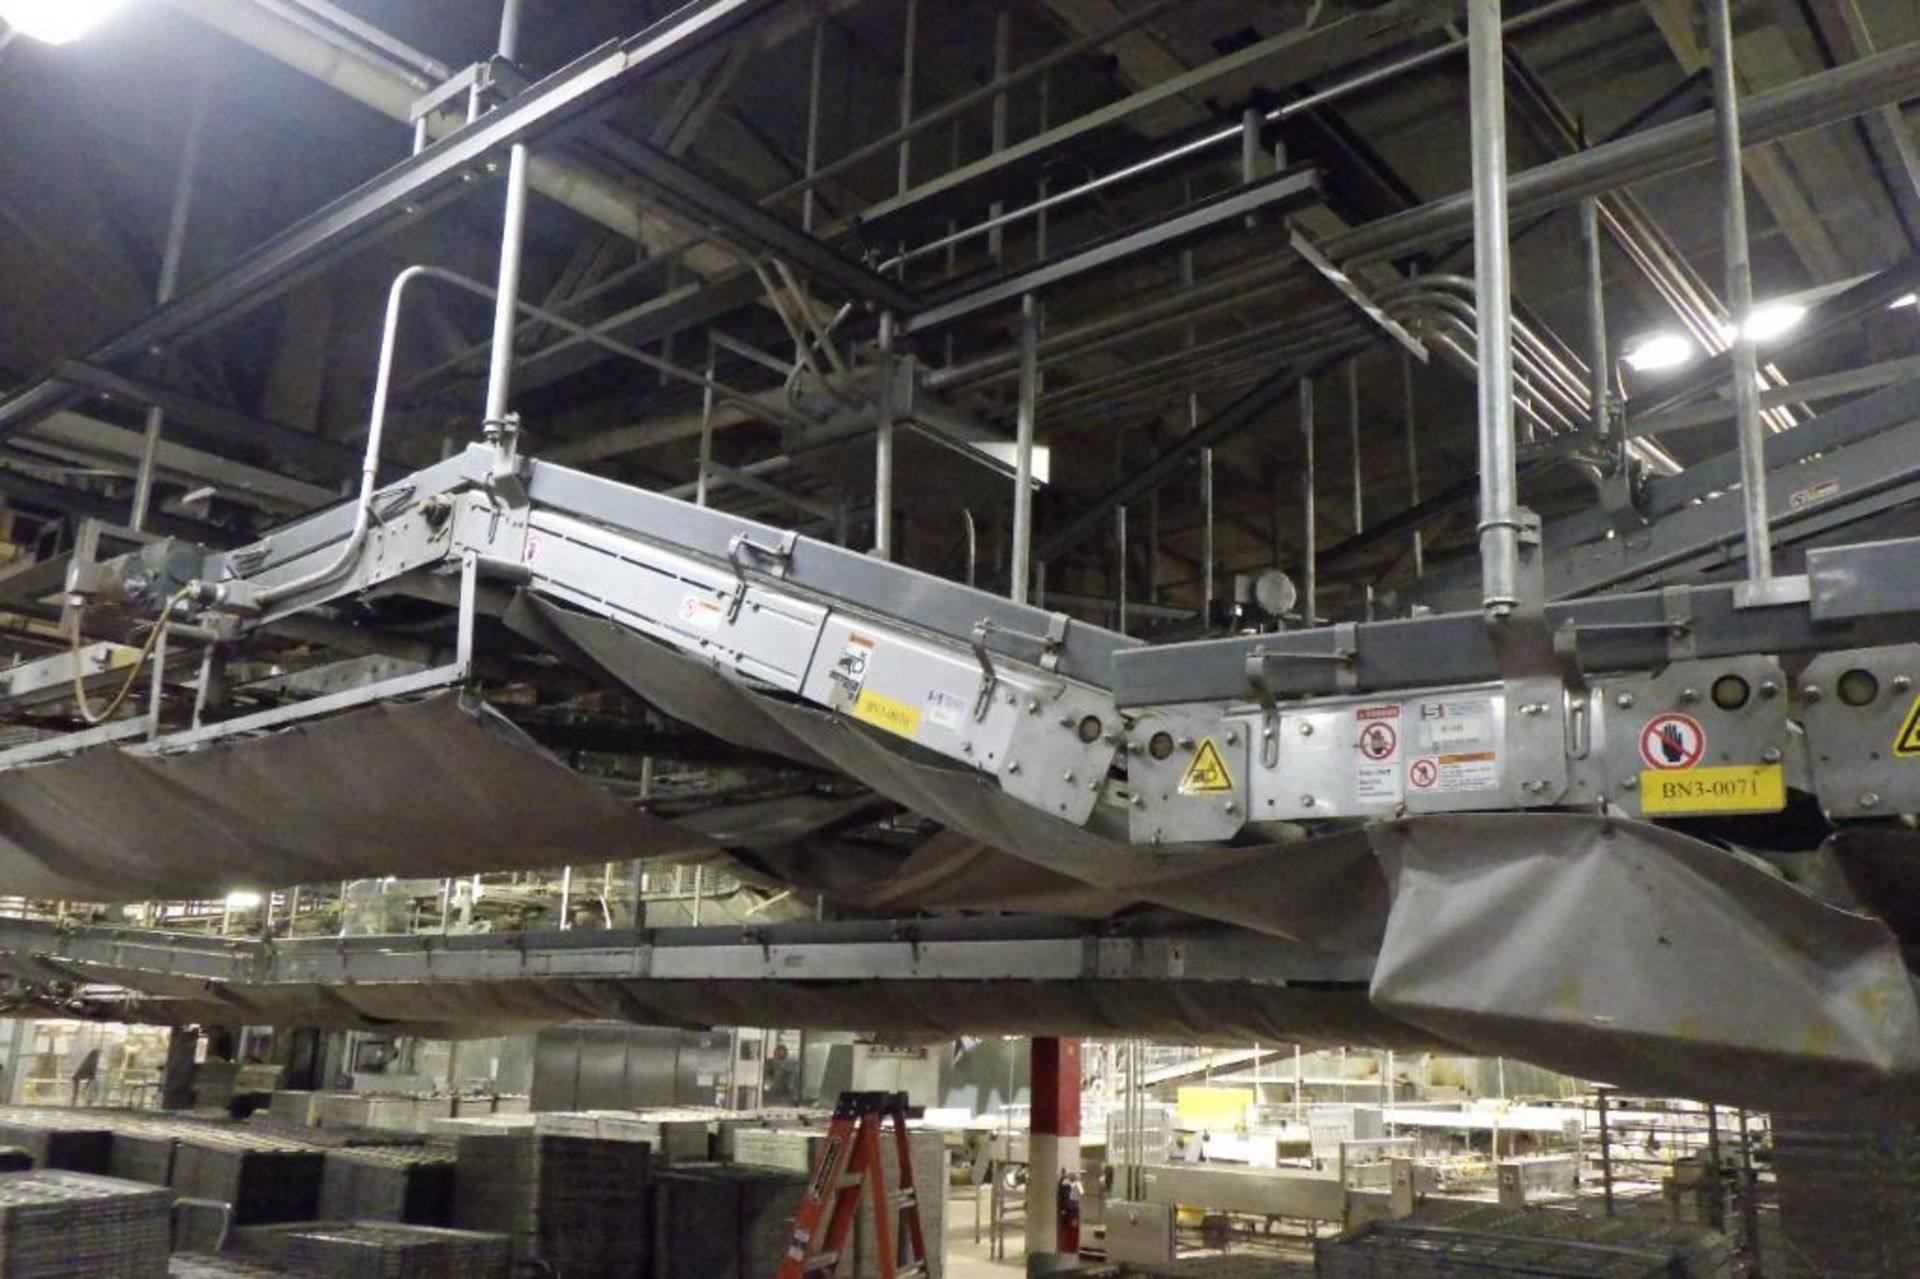 Stewart systems overhead conveyor - Image 16 of 29